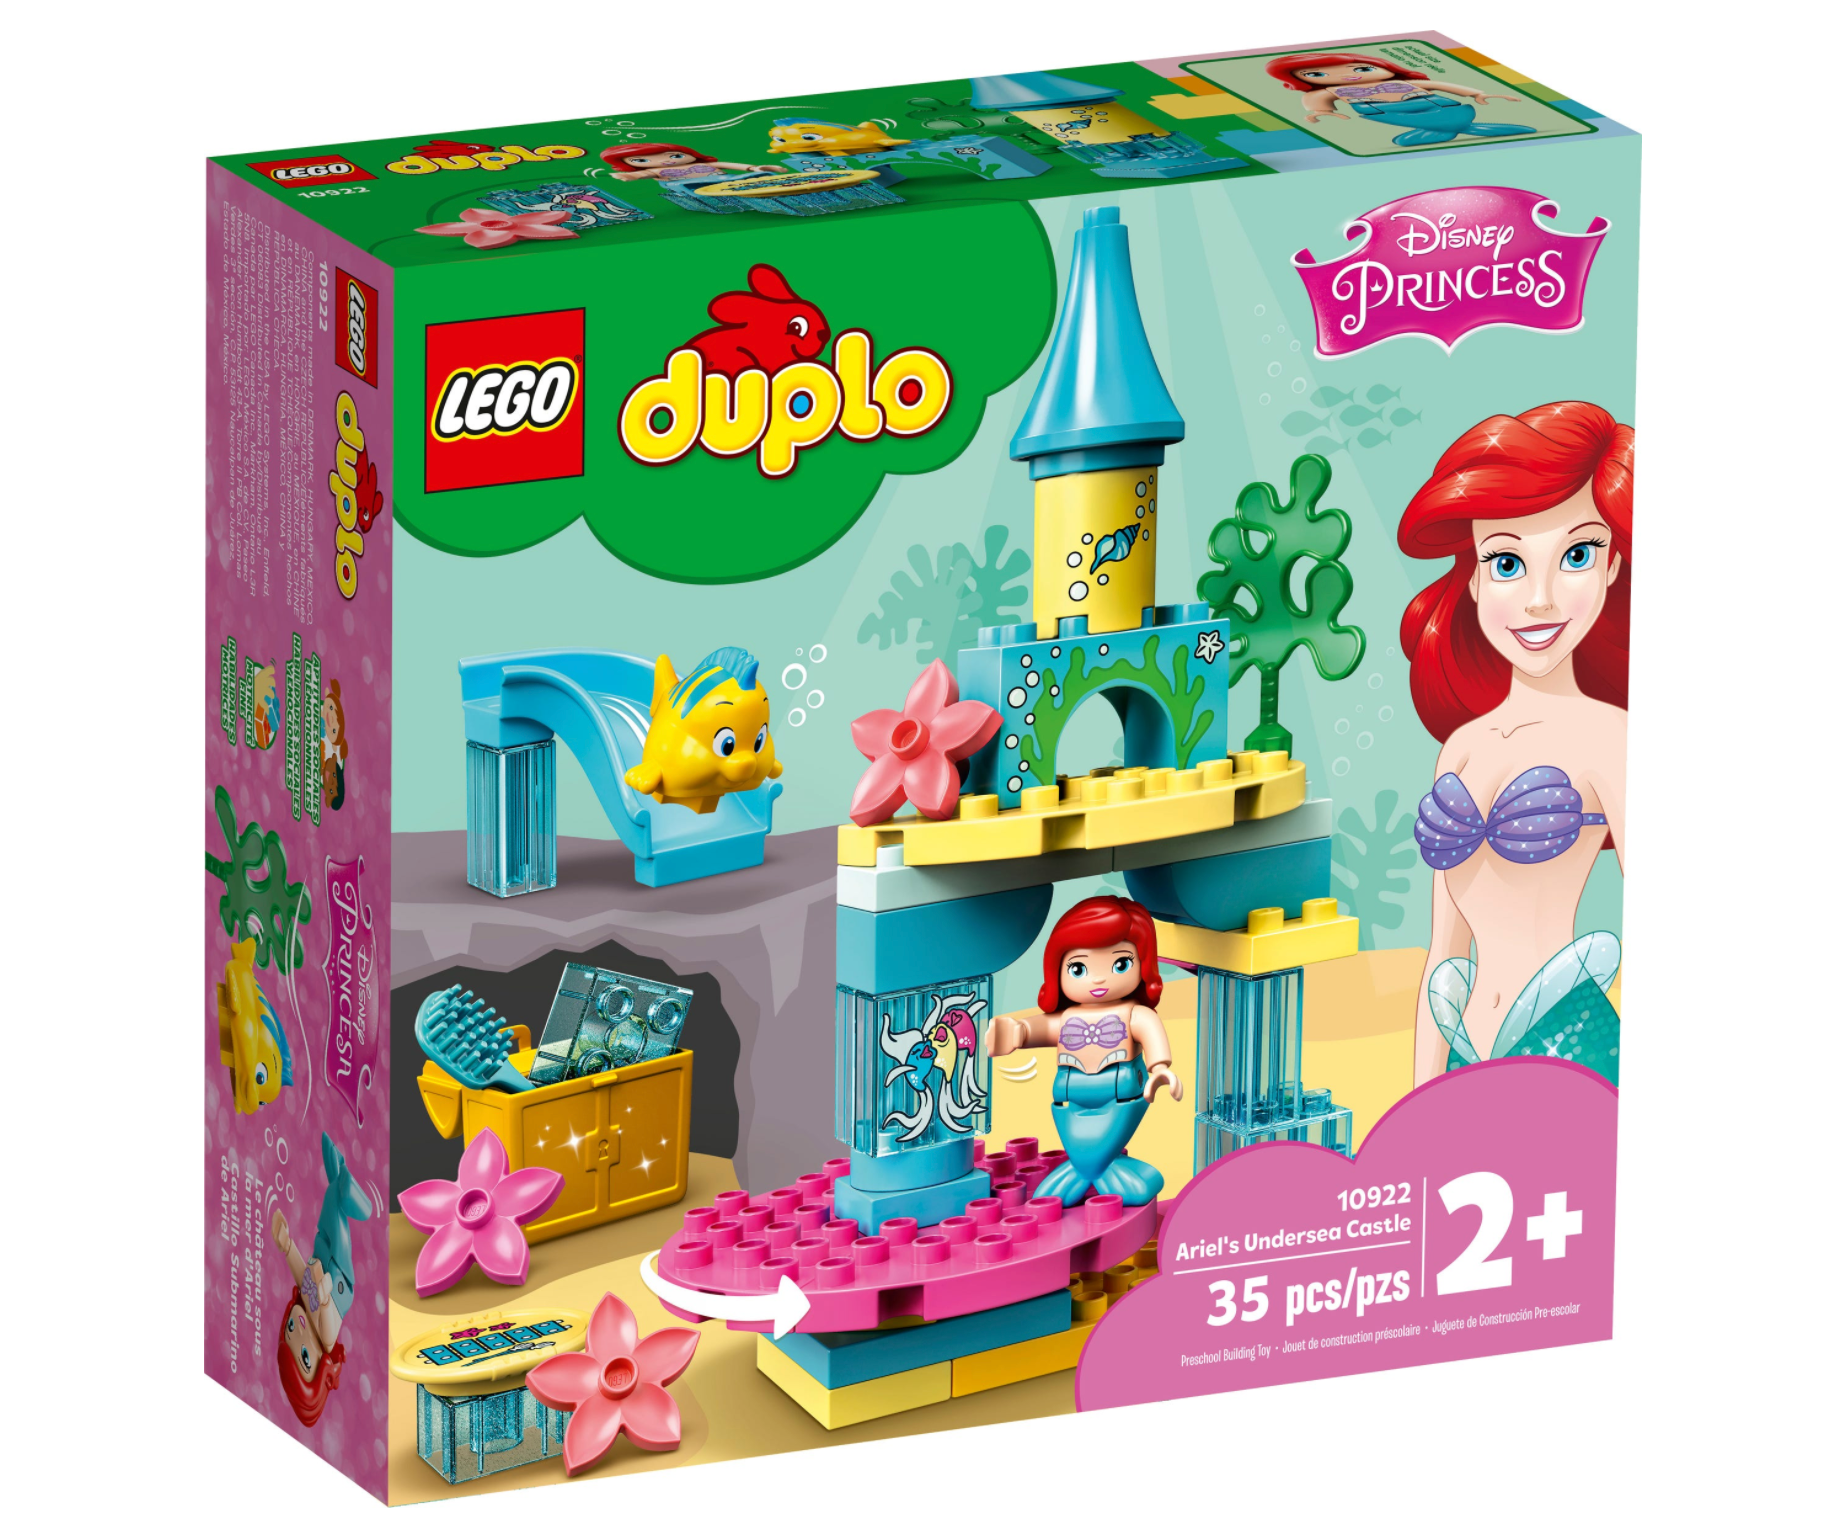 LEGO: DUPLO - Ariel's Undersea Castle